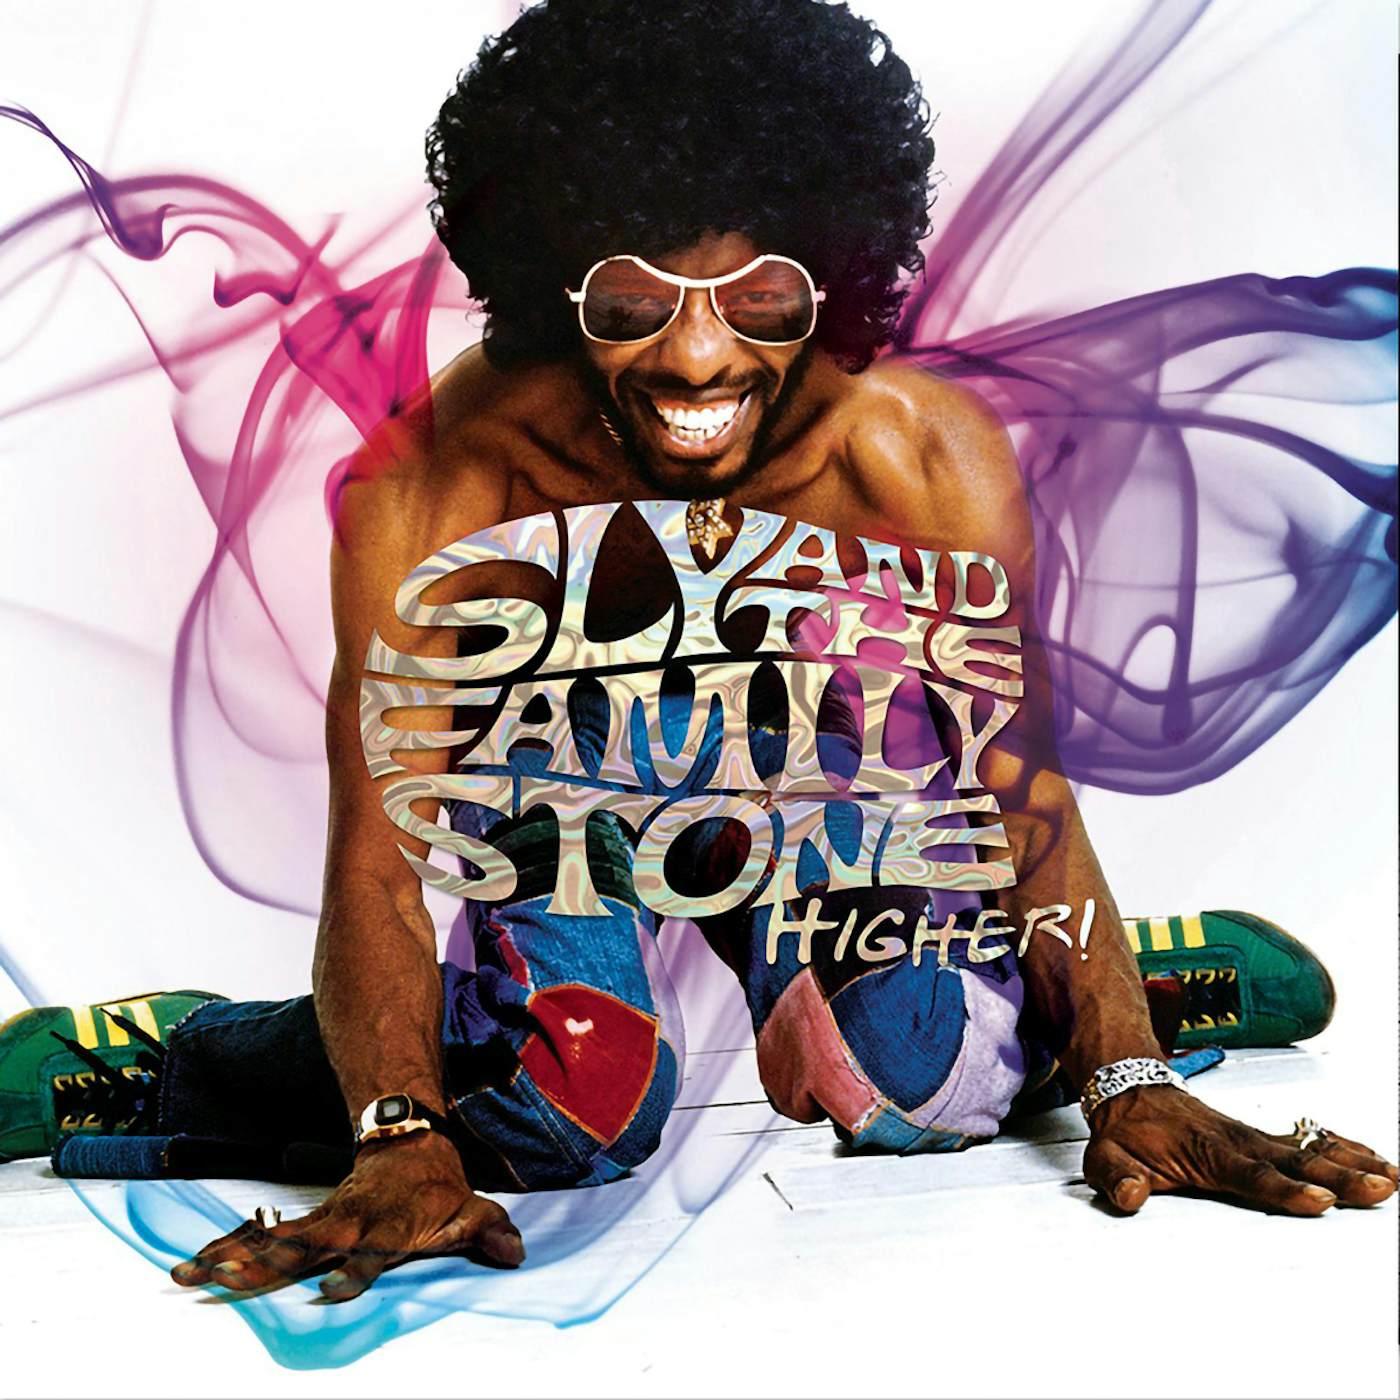 Sly & The Family Stone Higher! LP (Vinyl)